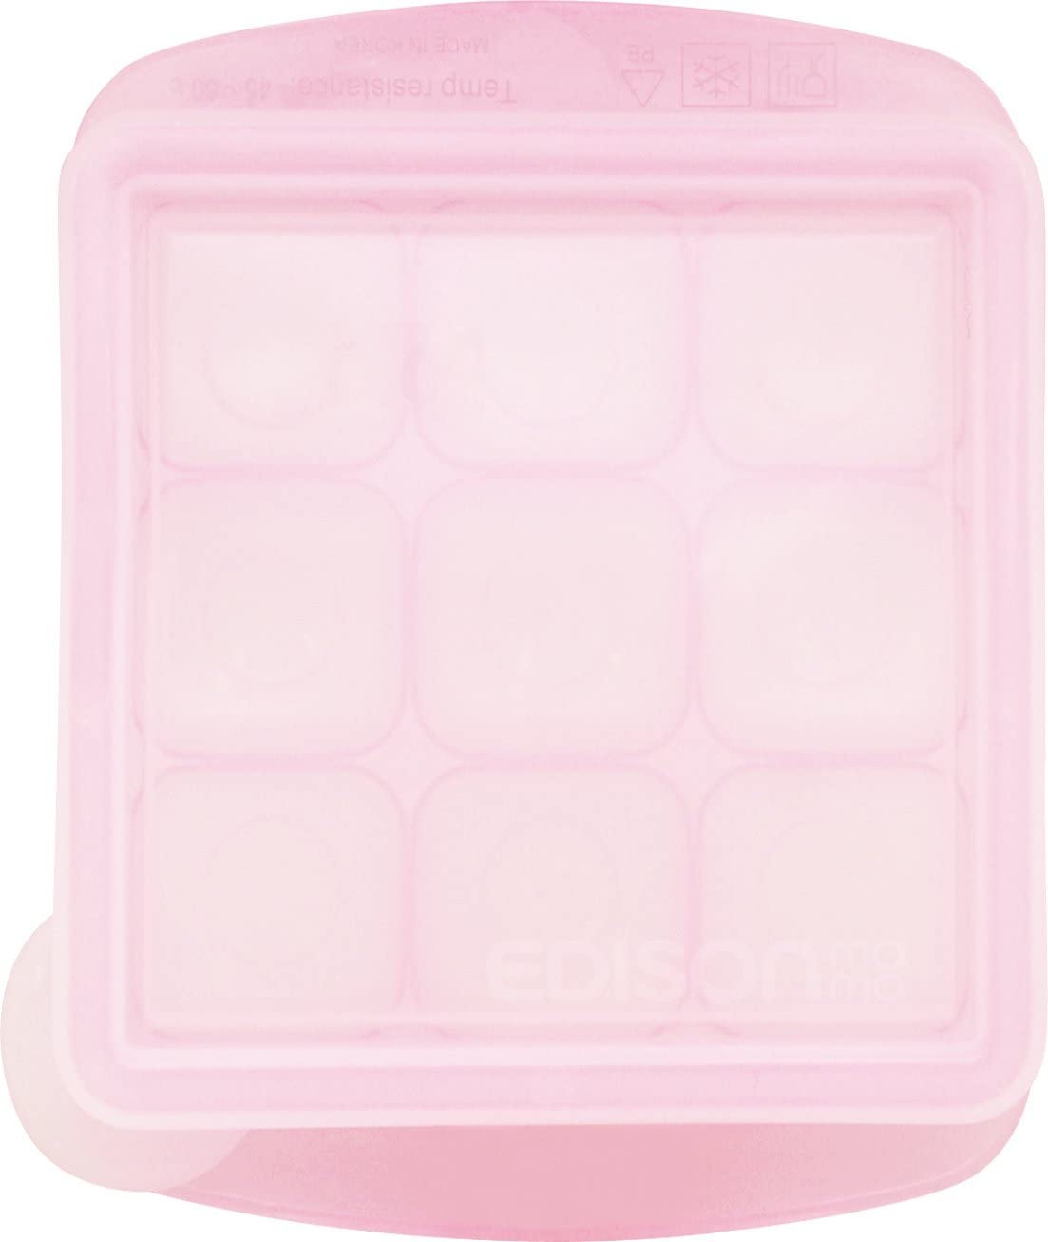 EDISONmama(エジソンママ) 冷凍小分けパックの商品画像3 